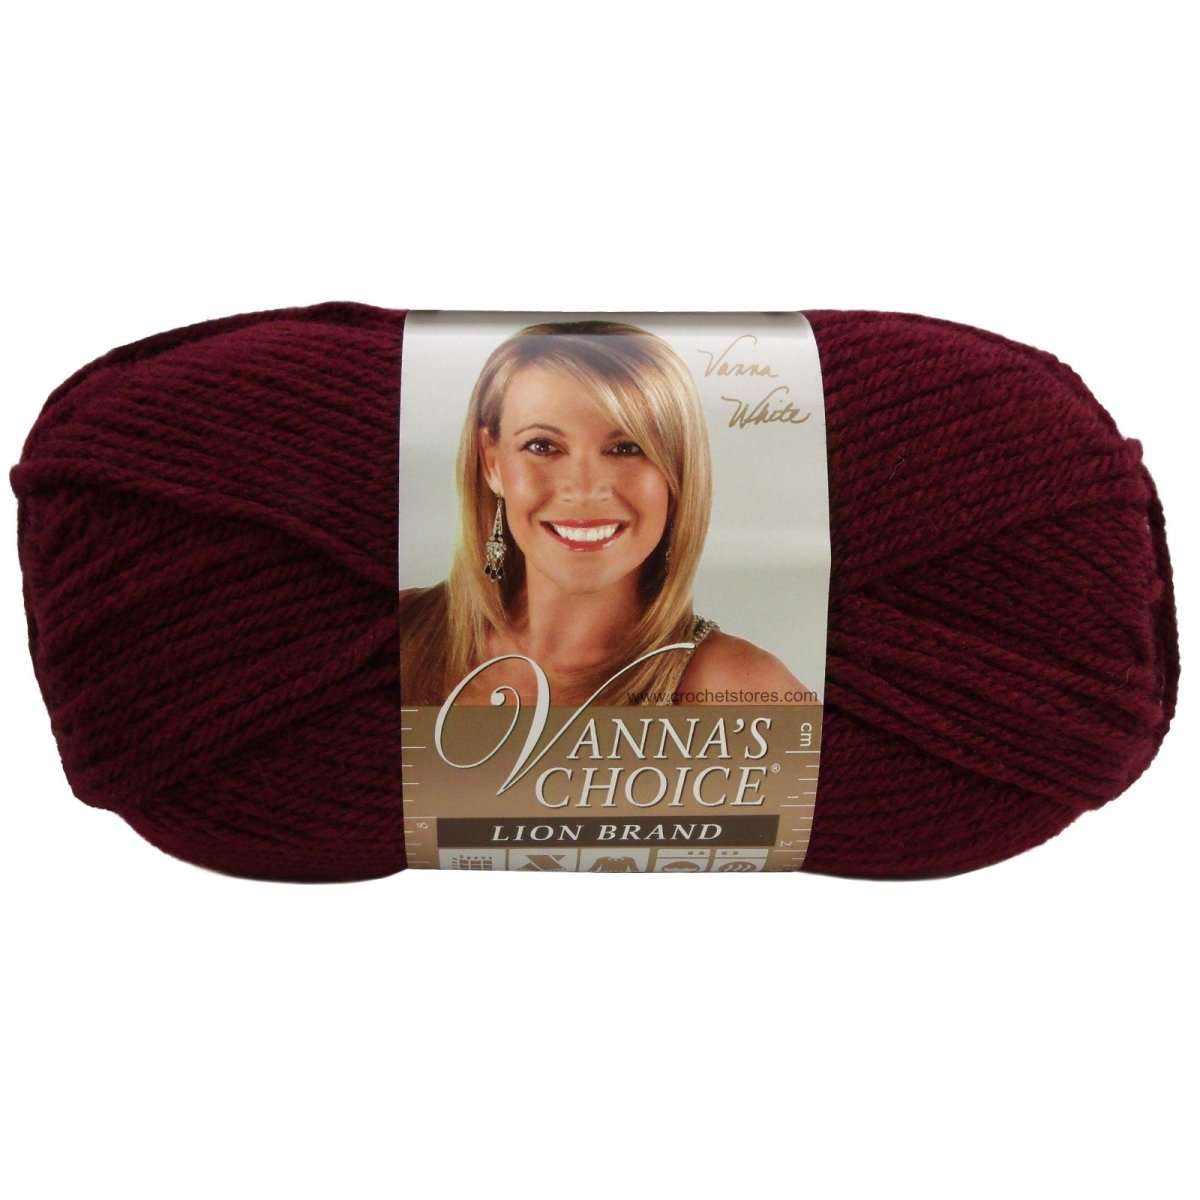 VANNAS CHOICE - Crochetstores860-148